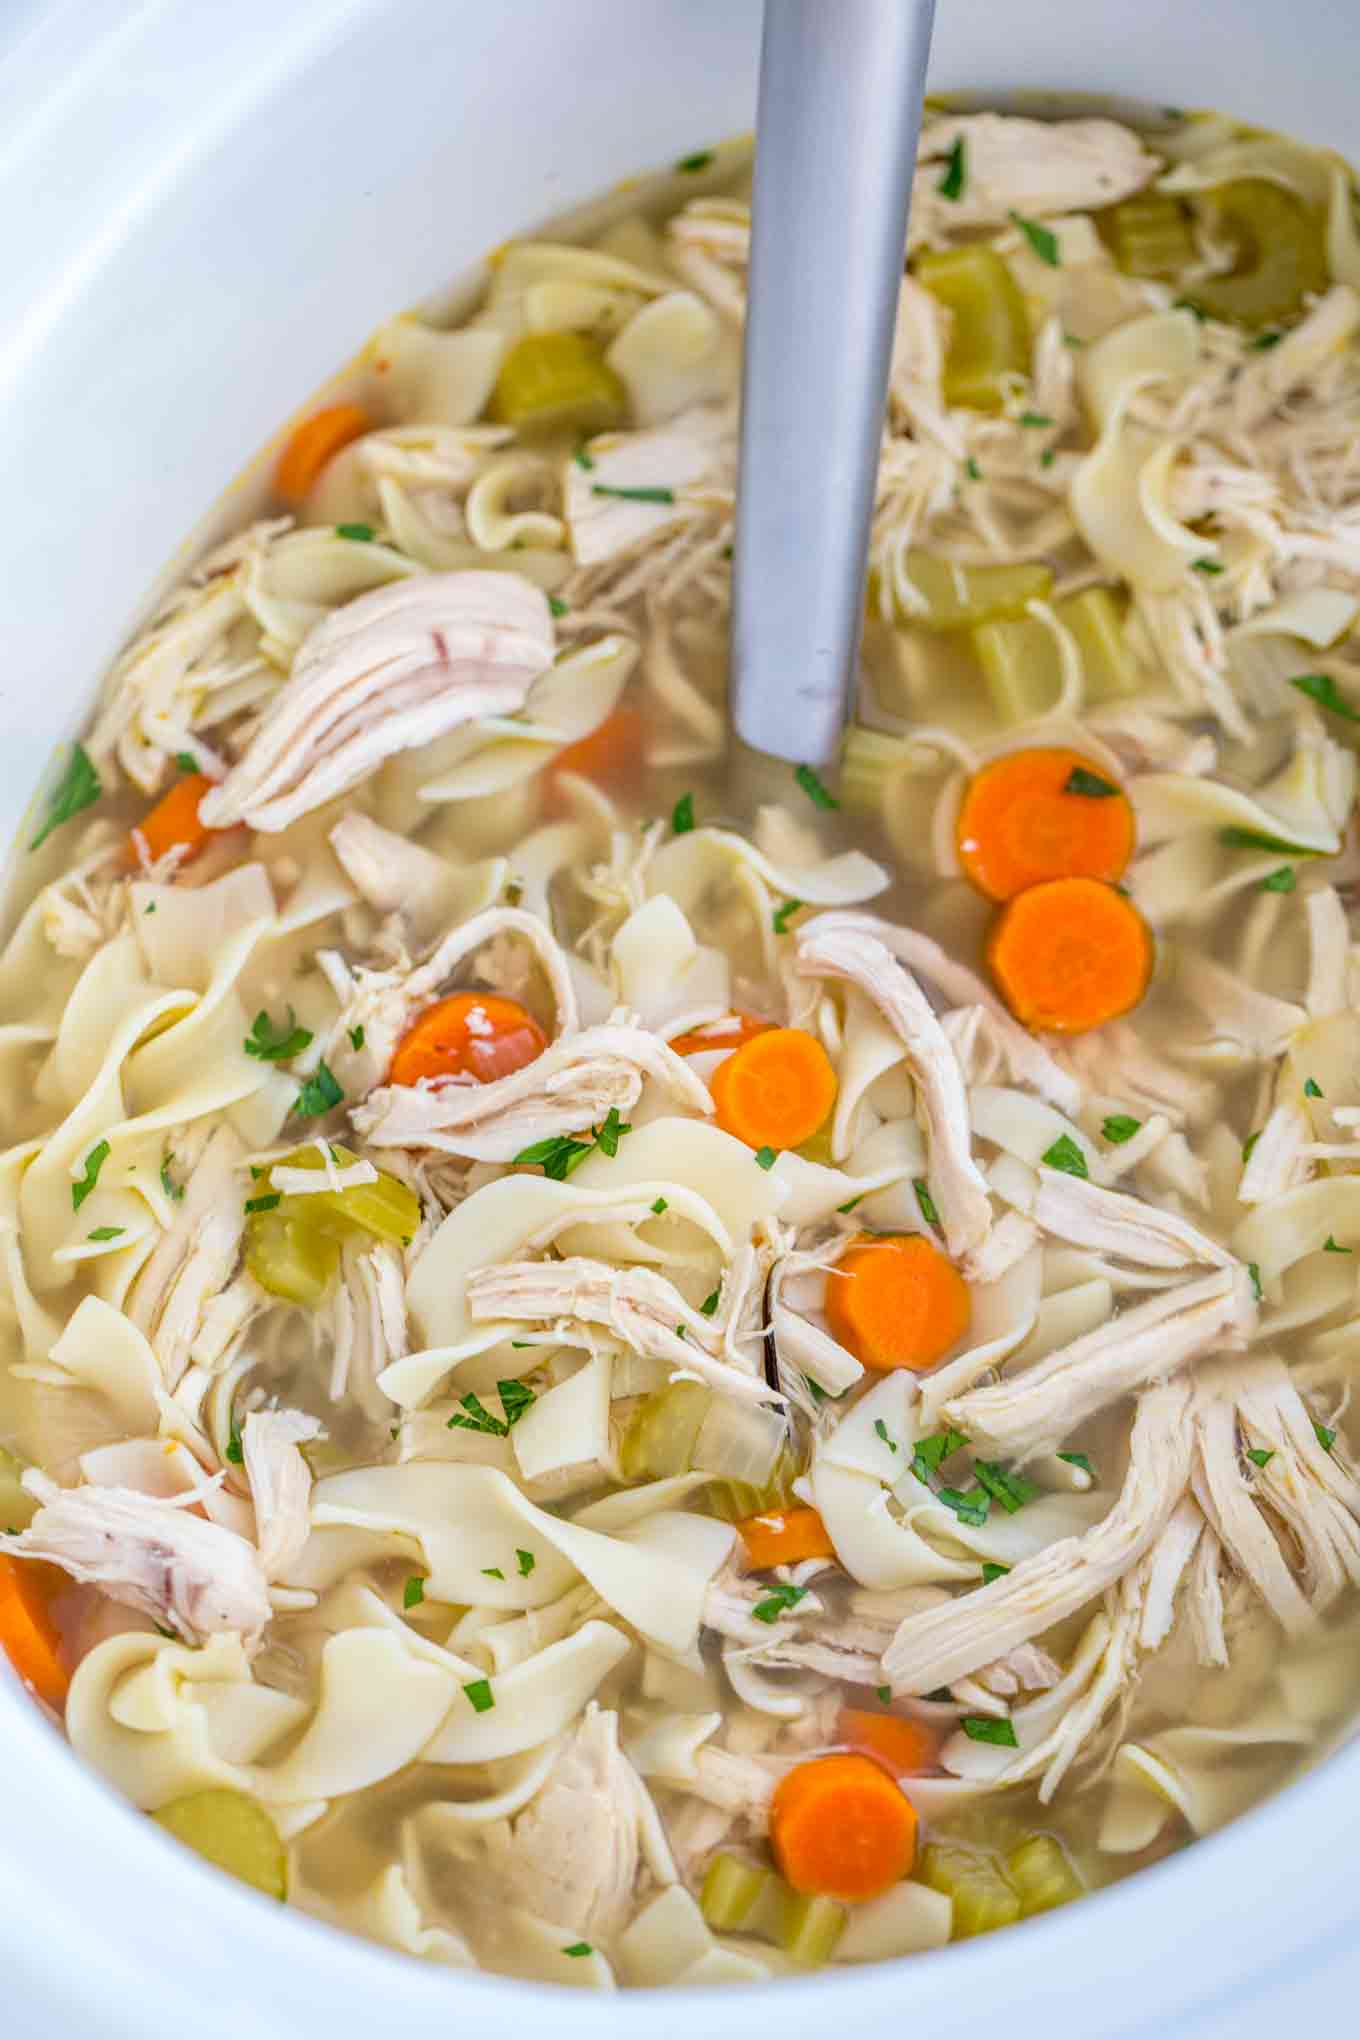 https://foodlove.com/wp-content/uploads/2019/03/Crockpot-Chicken-Noodle-Soup-via-Sweet-and-Savory-Meals.jpg